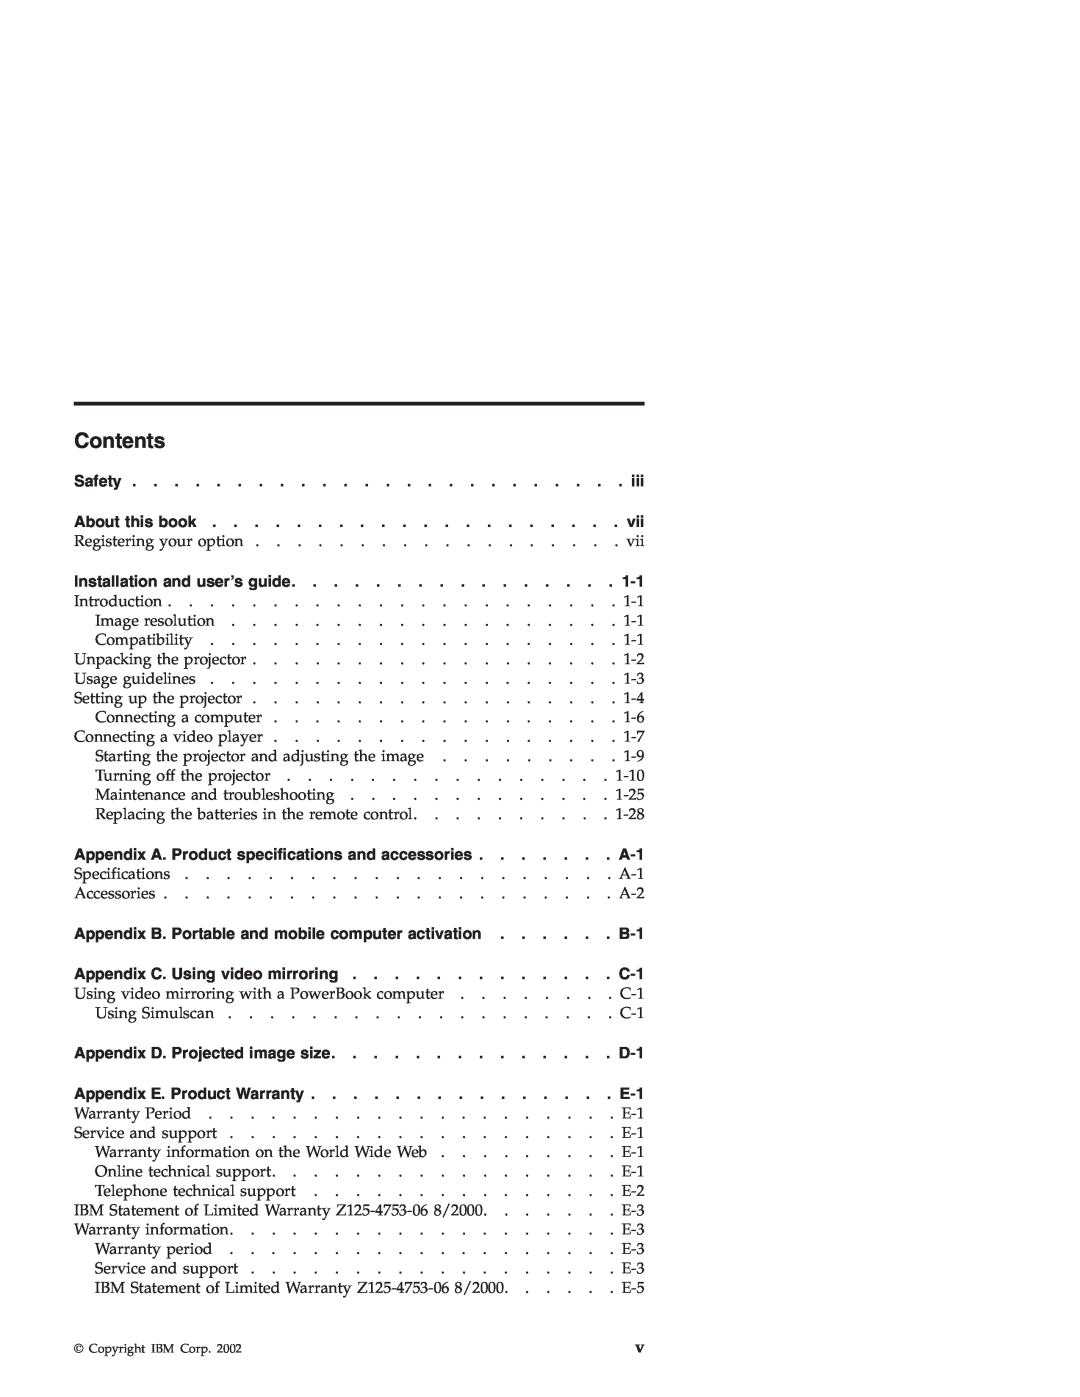 IBM ILC200, ILV200 manual Contents 